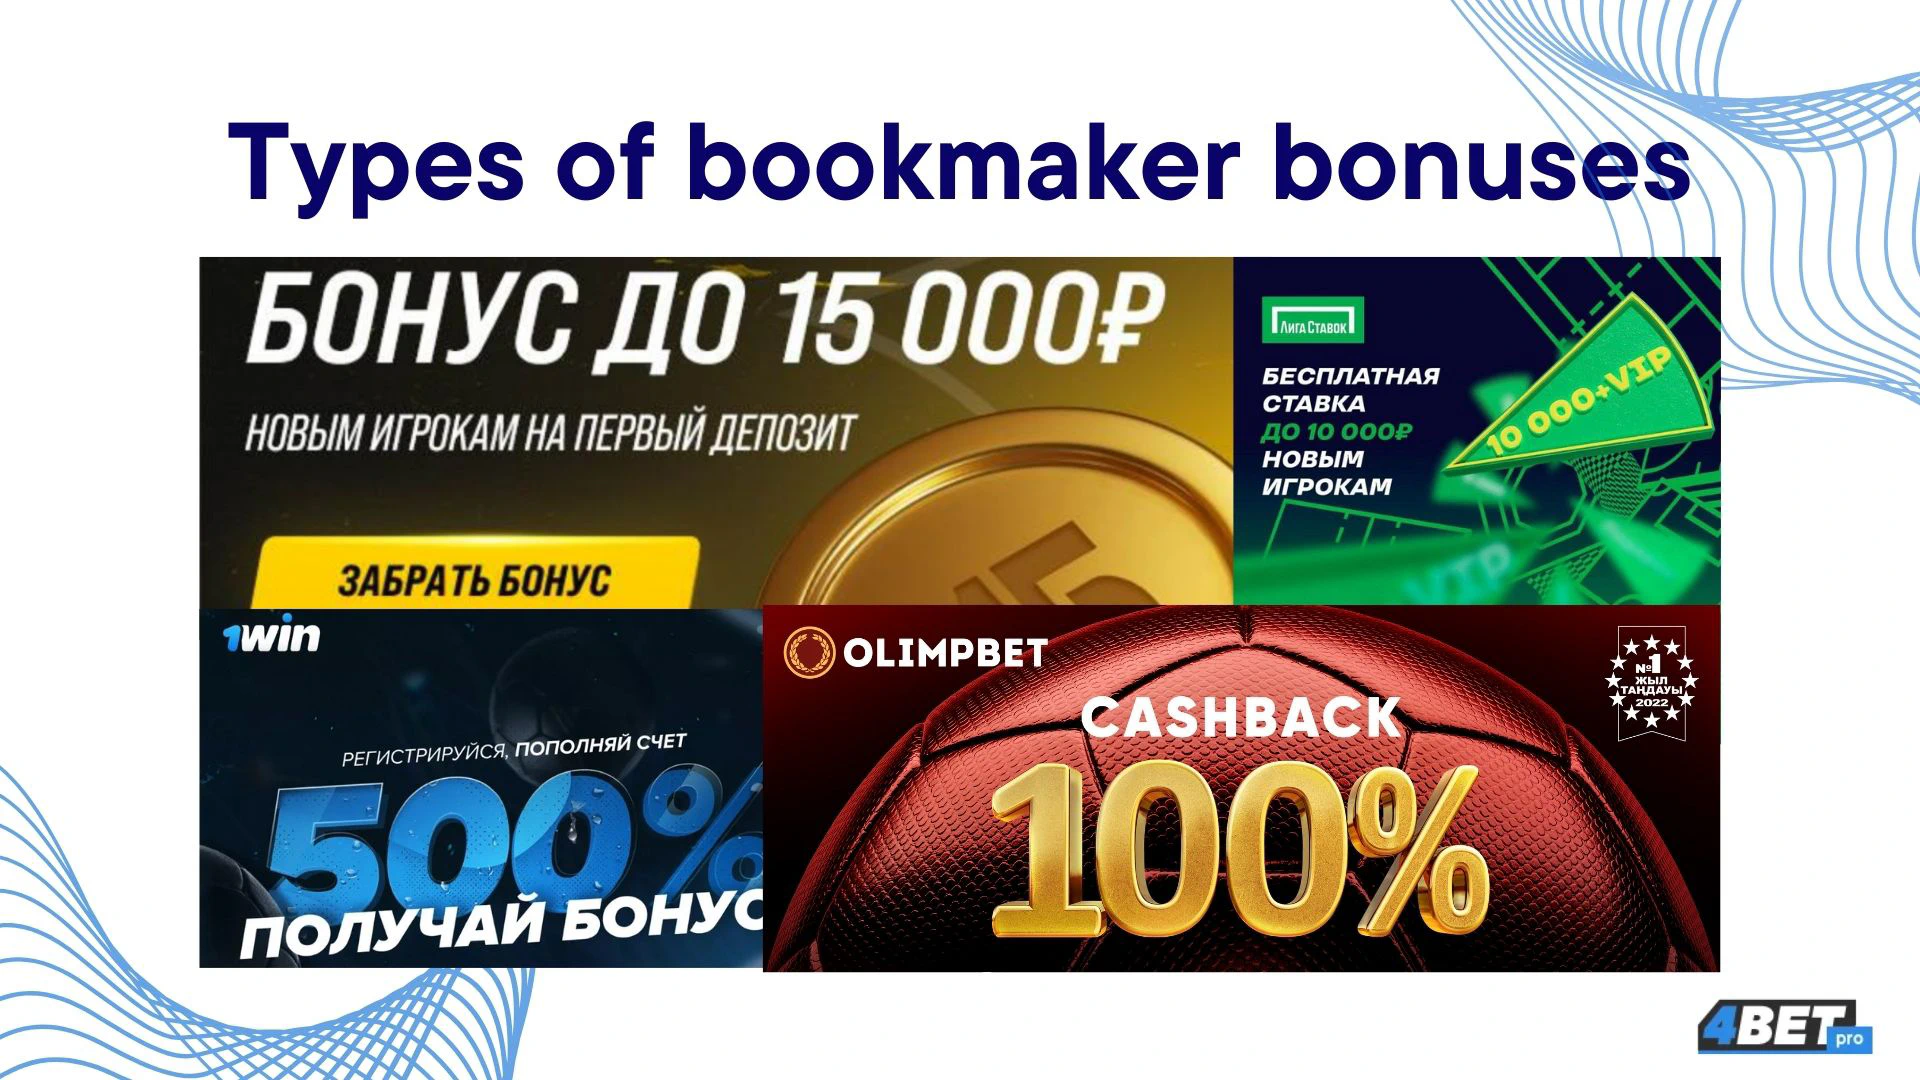 All bookmaker bonuses